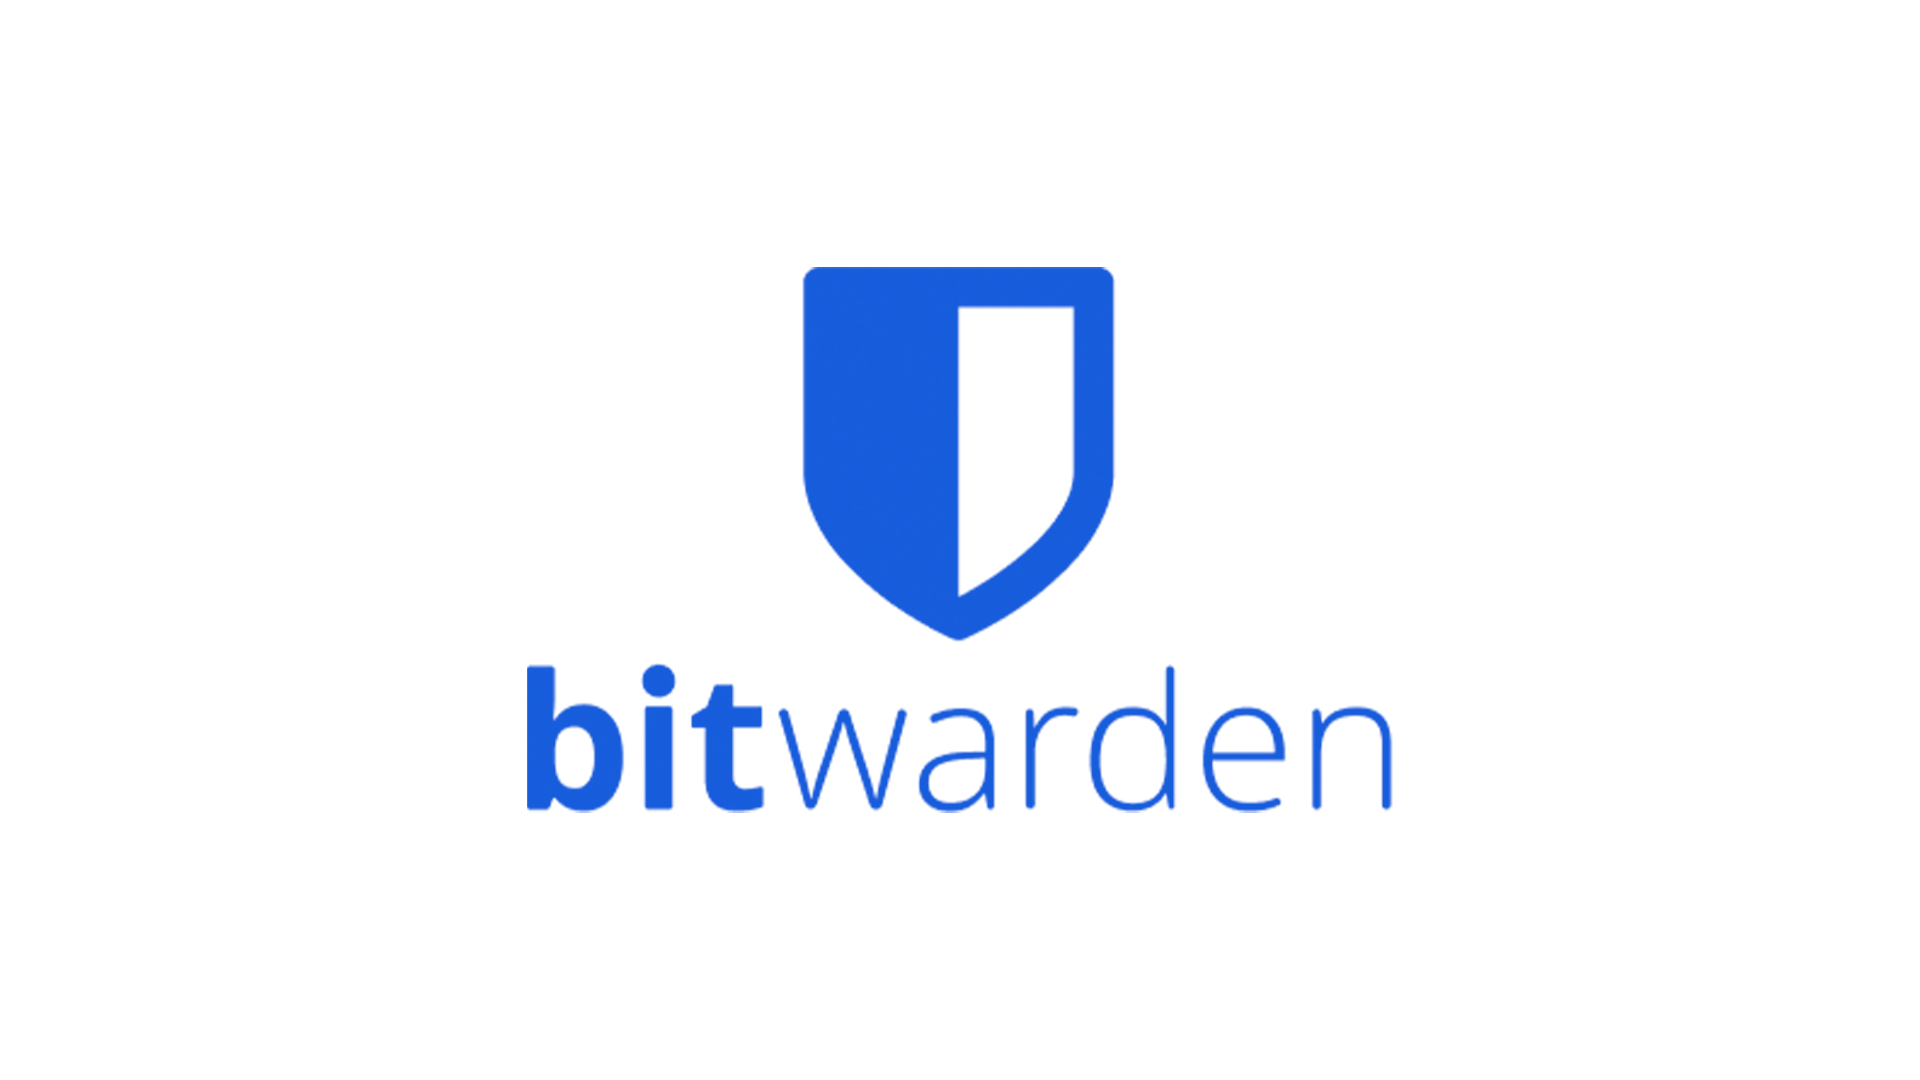 bitwarden icon and logo on a white background